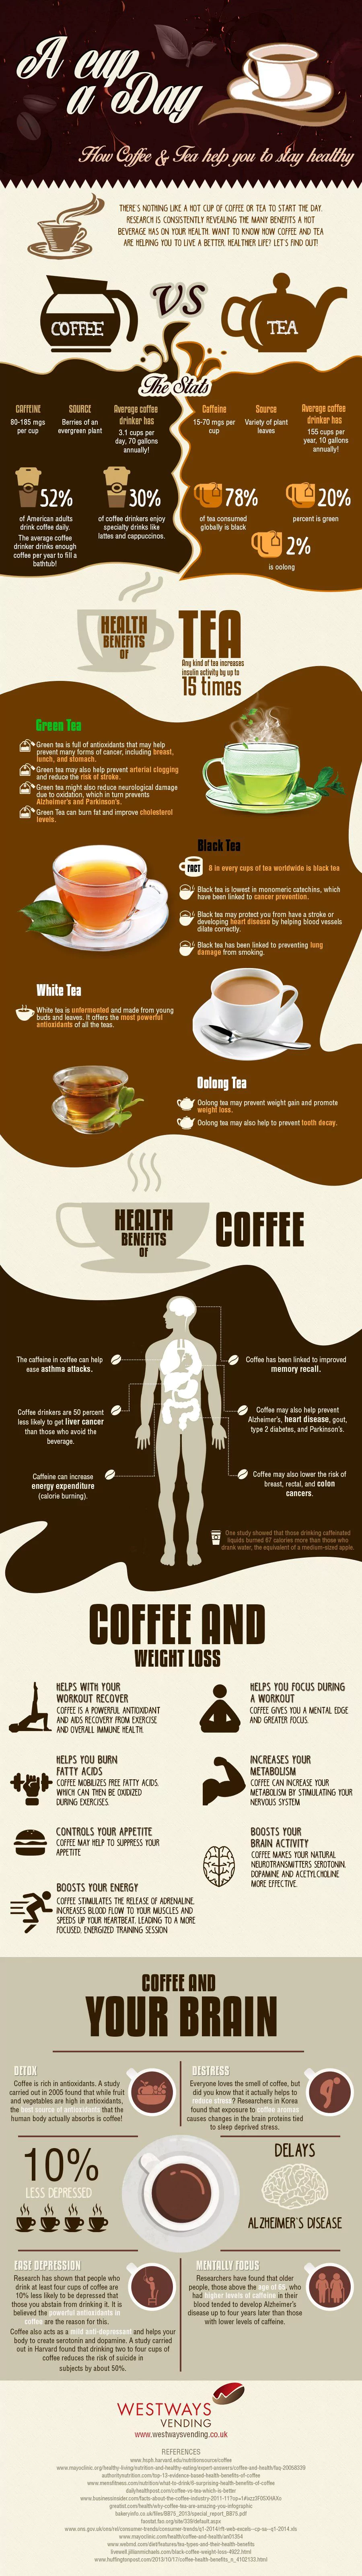 Health Benefits Of Coffee And Tea